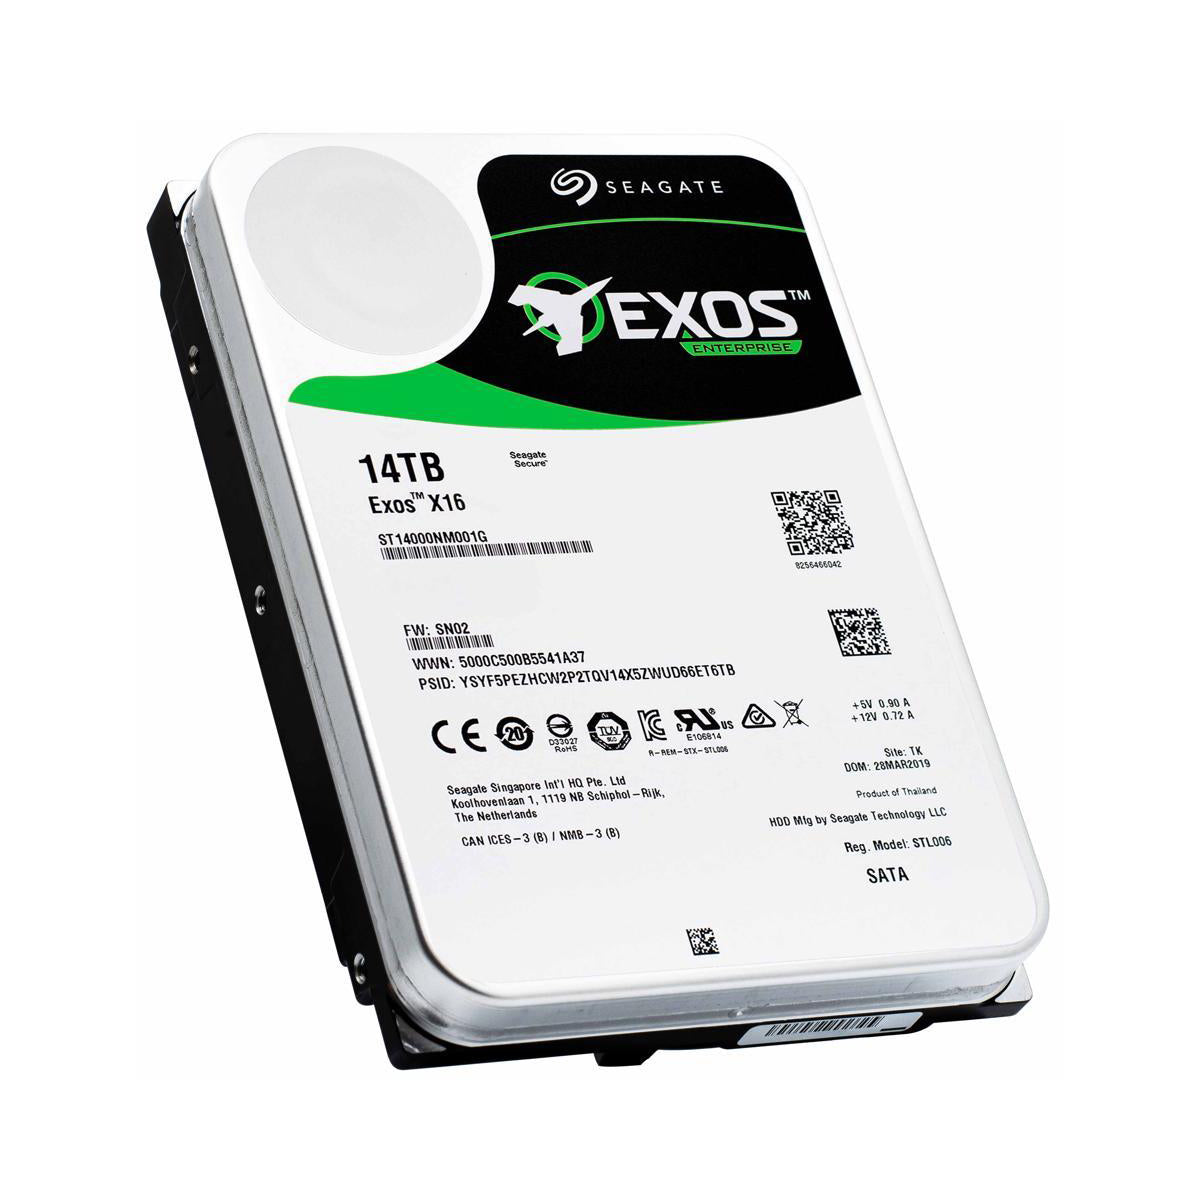 Seagate Exos X16 14tb Hdd | Internal Hard Disk (Used Very Clean)